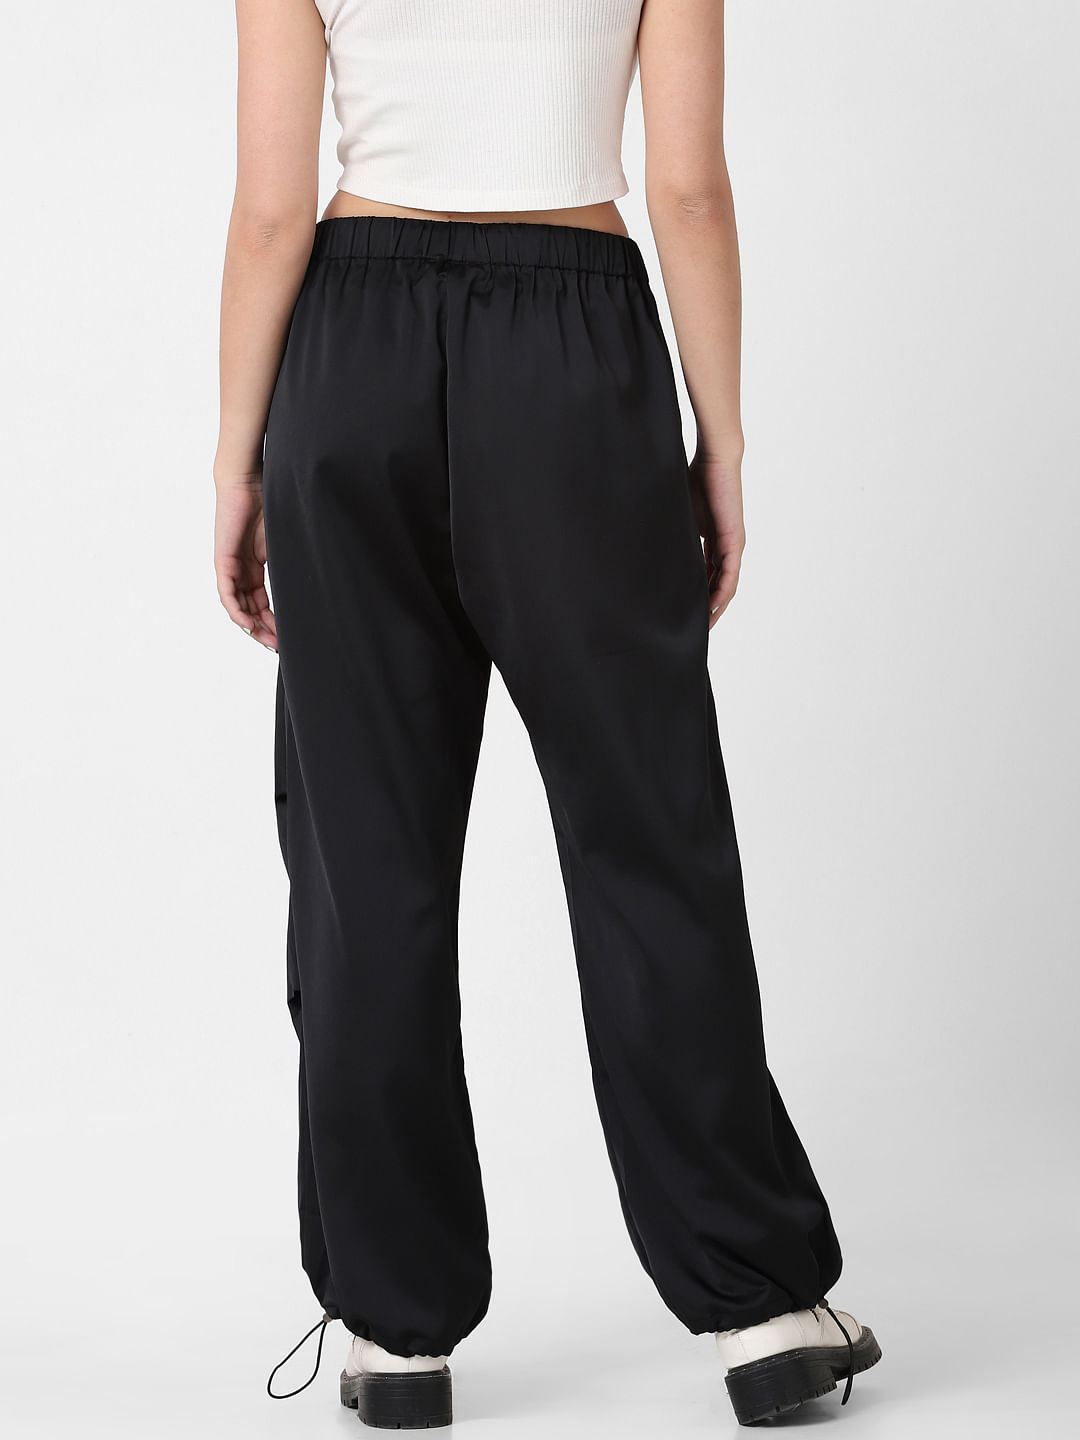 Bewakoof Trousers and Pants  Buy Bewakoof Womens Black Elastic Waistband  Cargo Pants Online  Nykaa Fashion